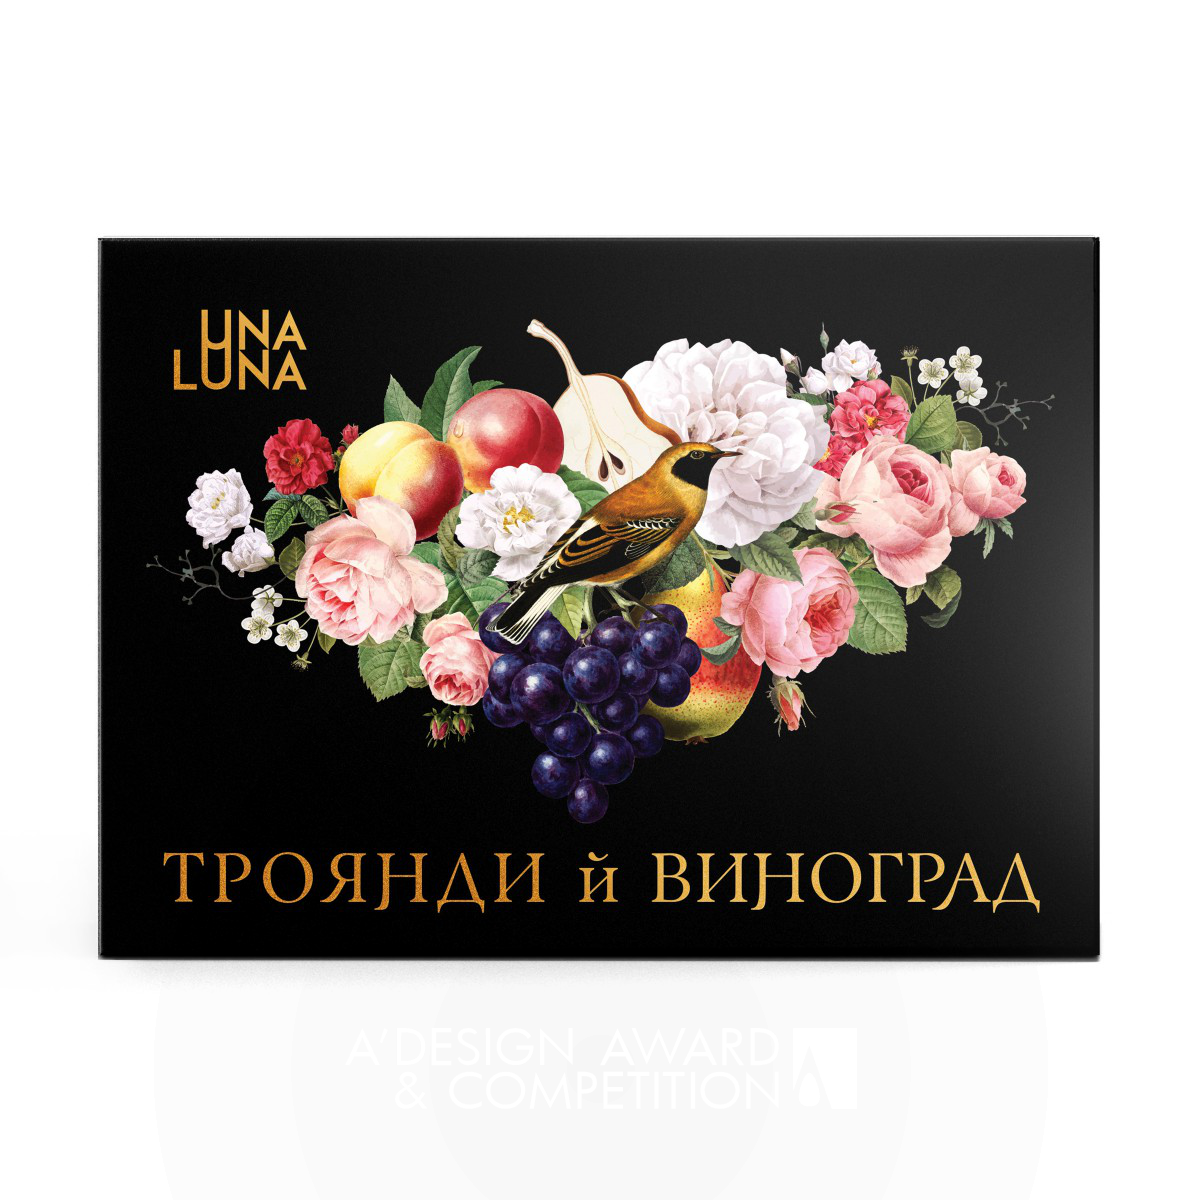 Olga Takhtarova Confectionery Packaging